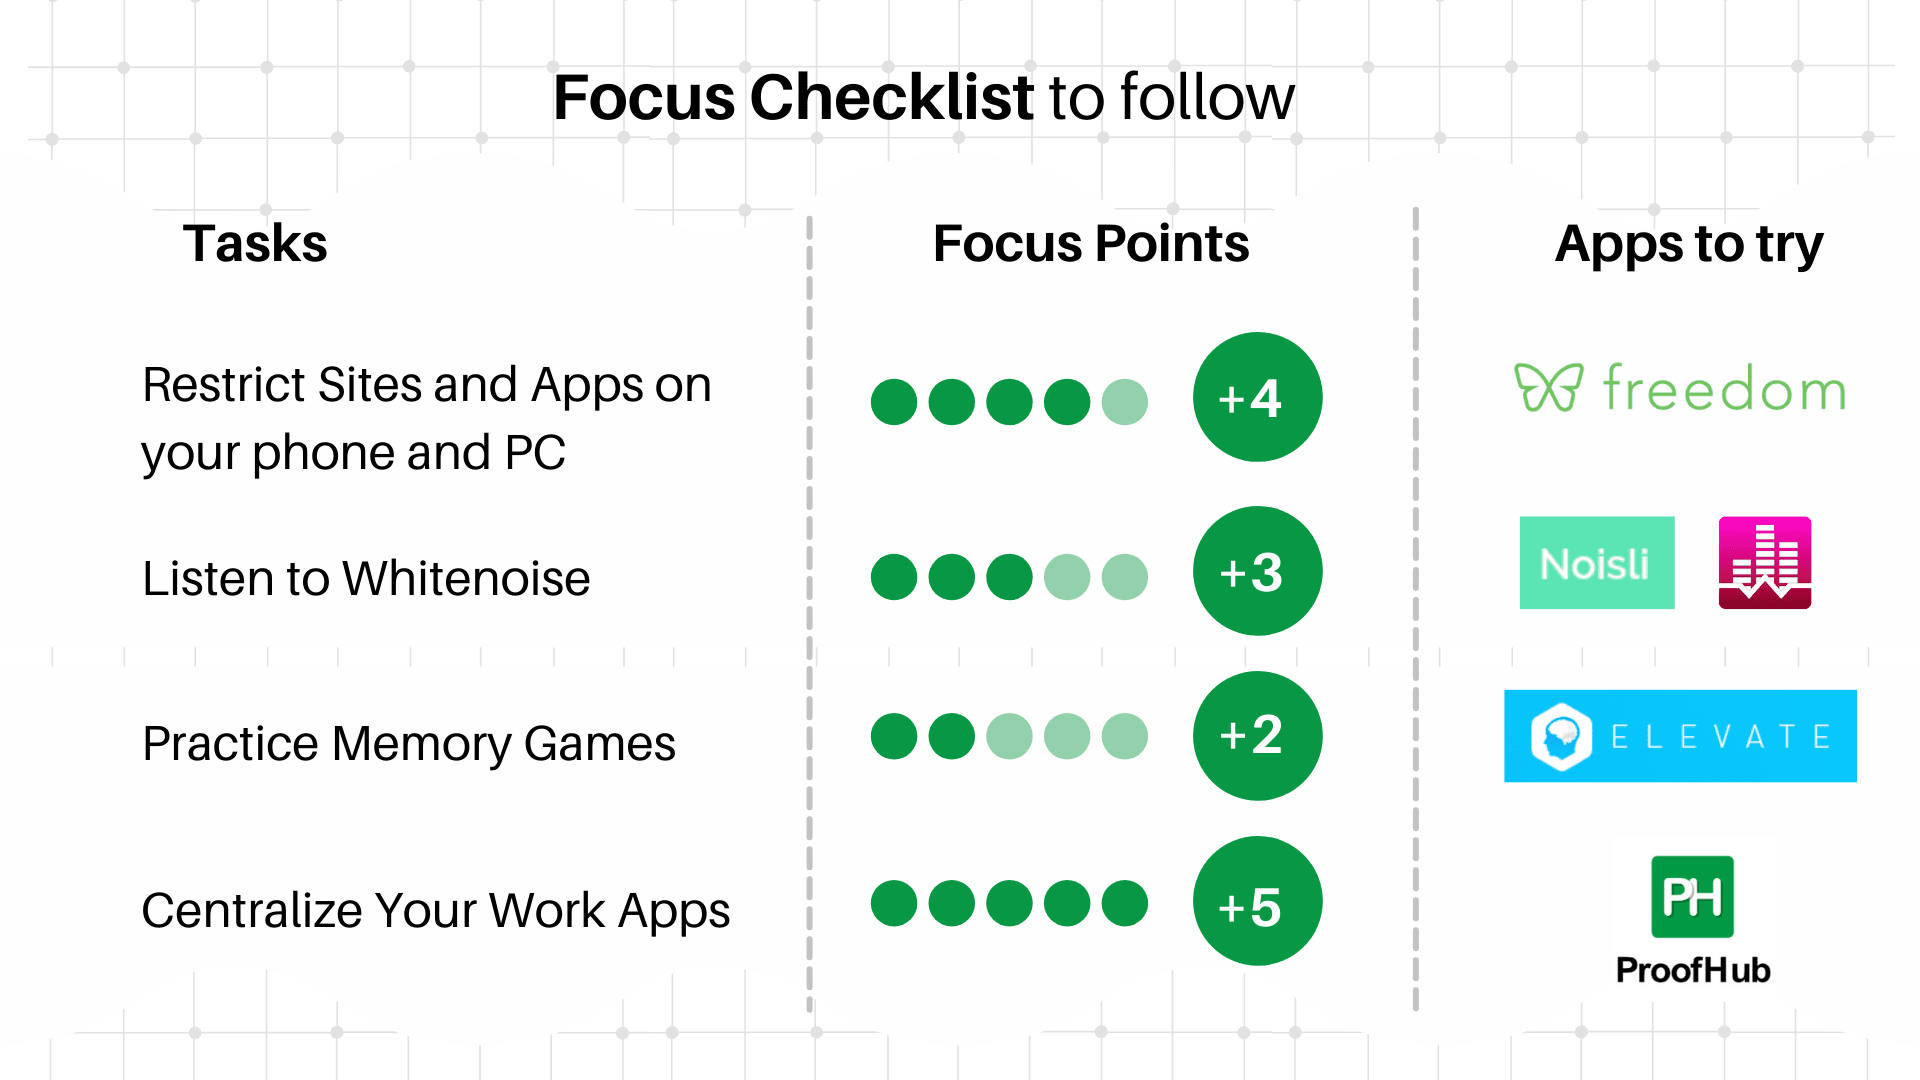 Focus checklist to follow